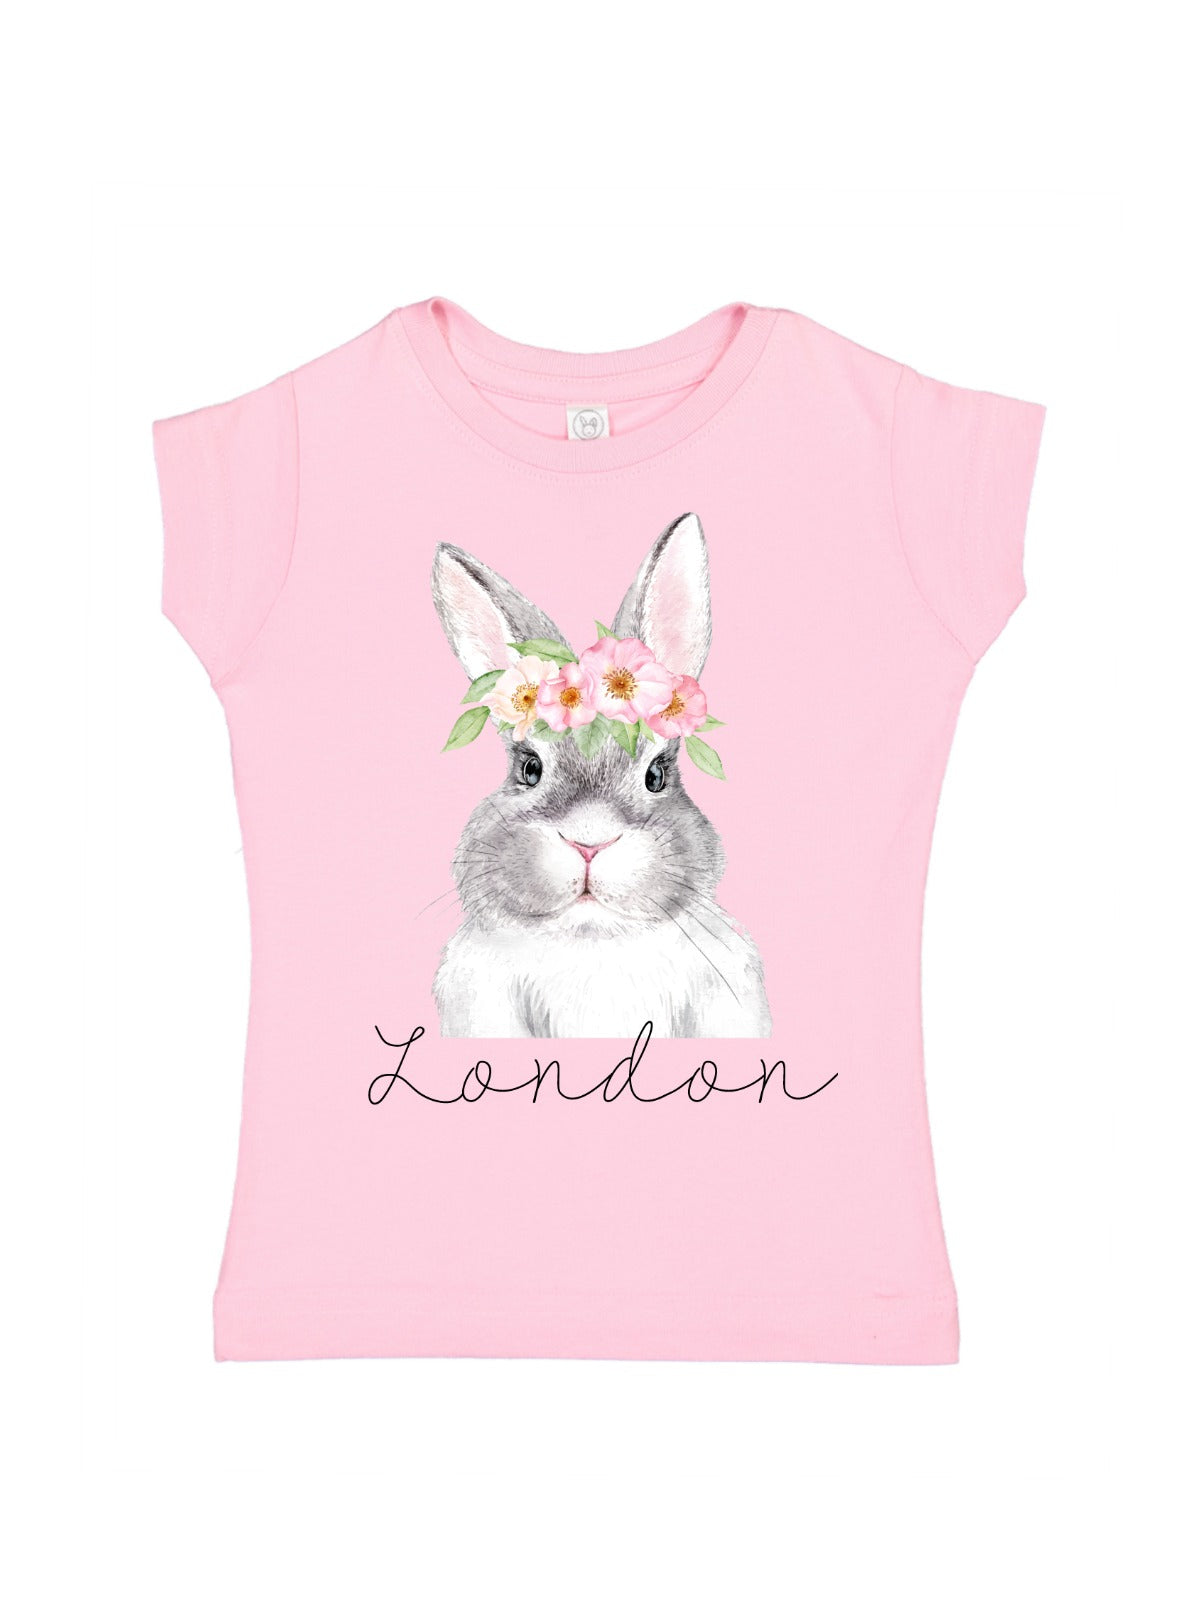 Watercolor Bunny Shirt for Girls